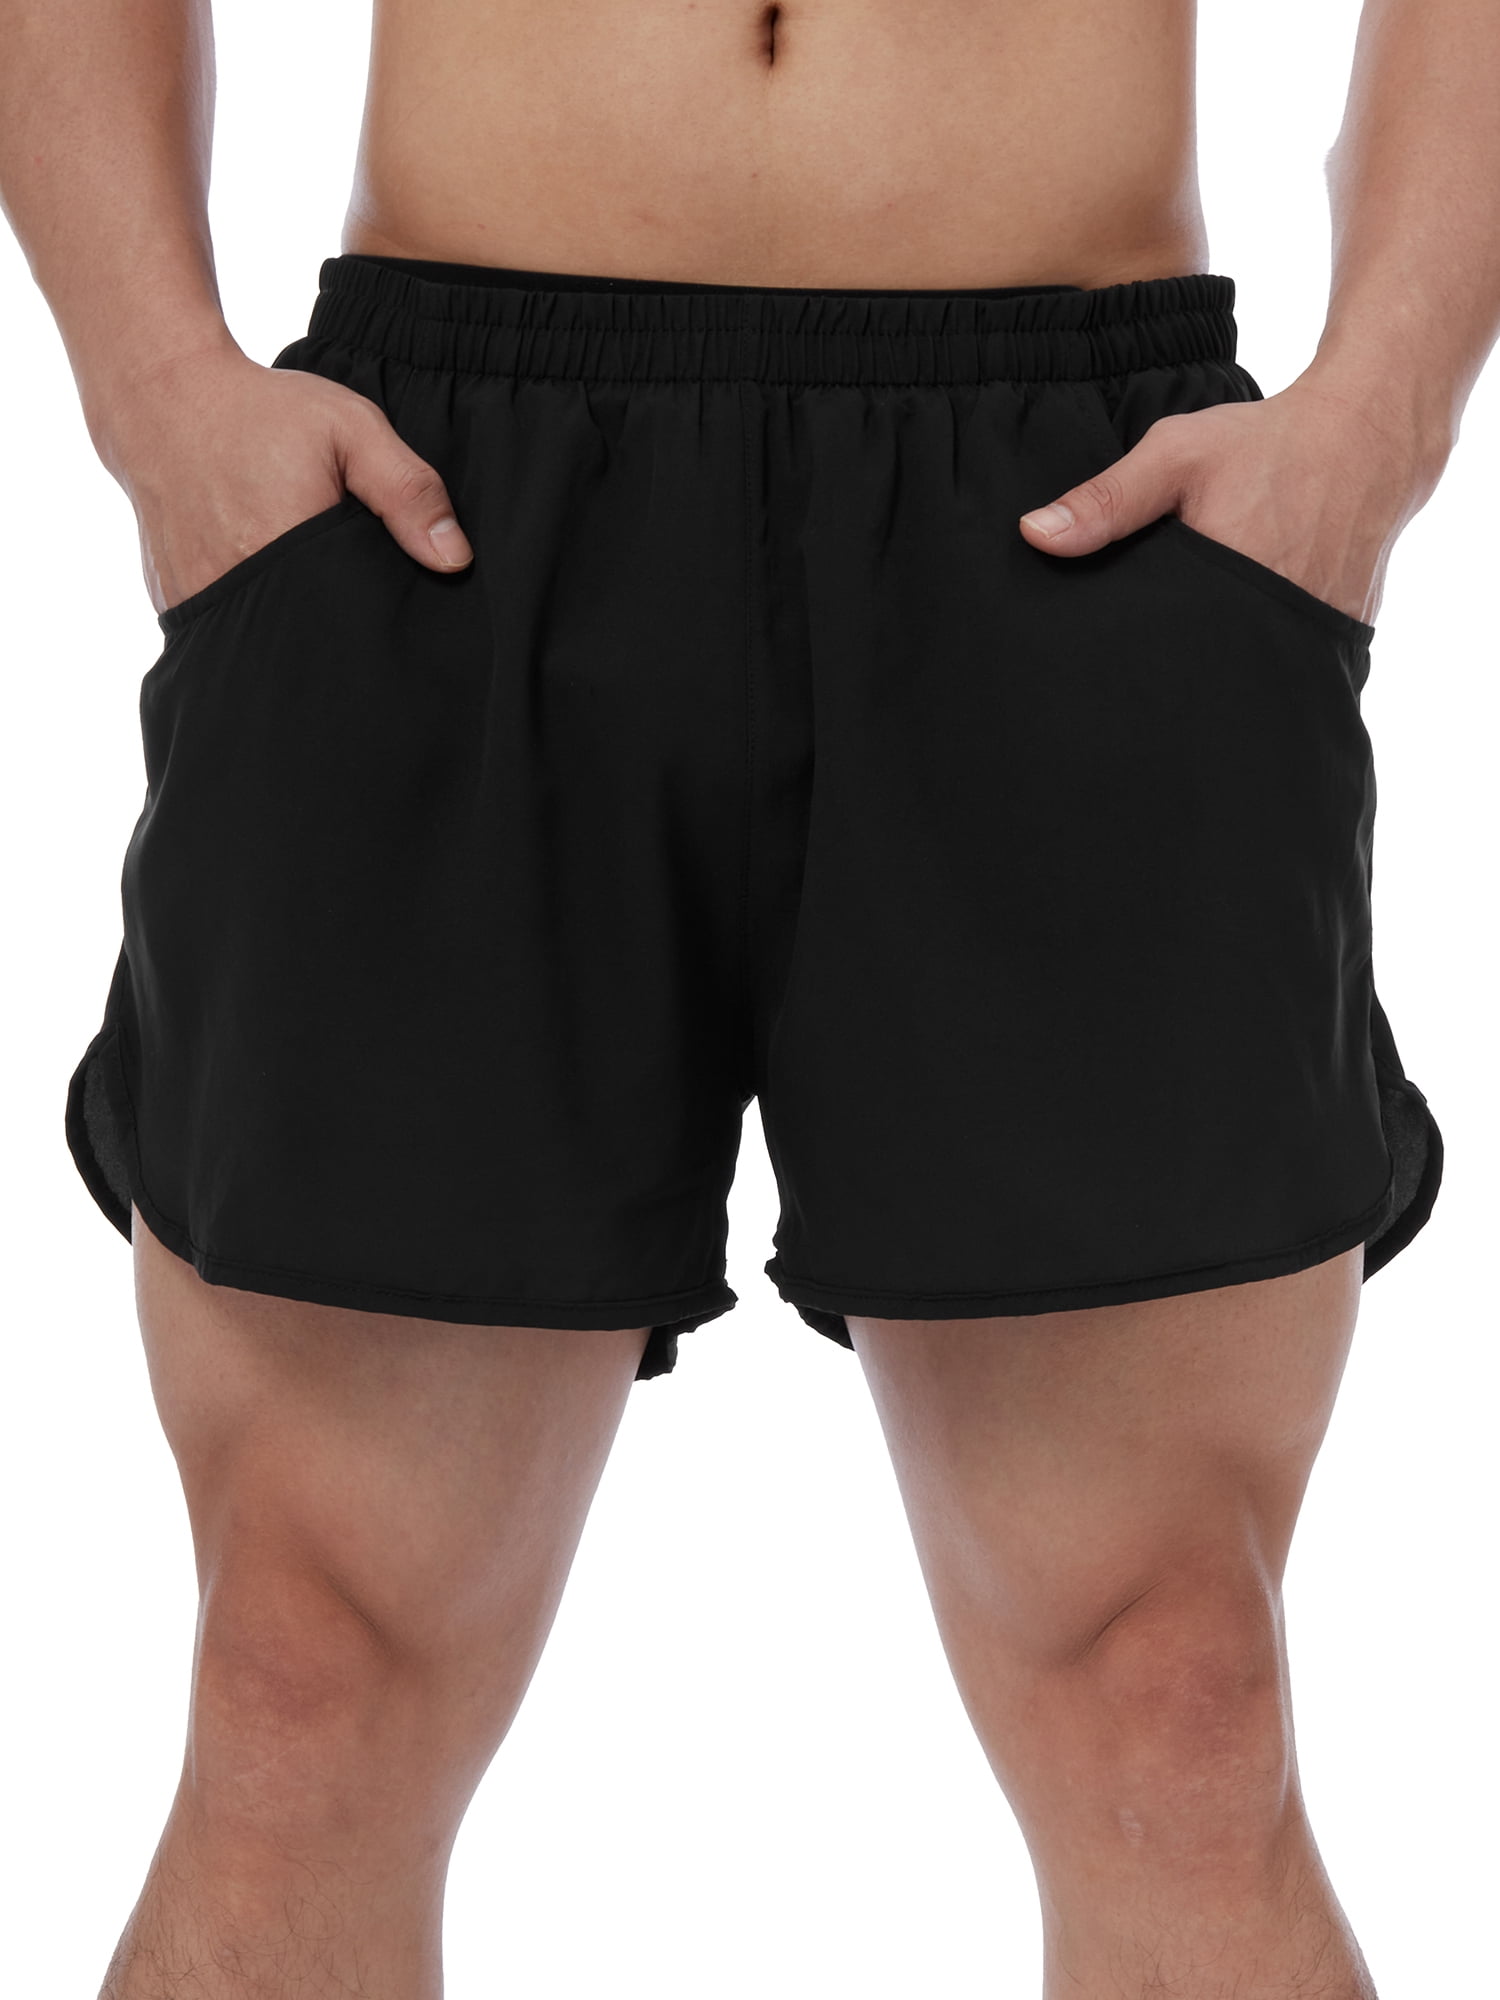 Swim Shorts Swim Trunks Mens Bathing Suits Waist Drawstring Shorts Pants Swimwear Beachwear Underwear Shorts Walmart.com